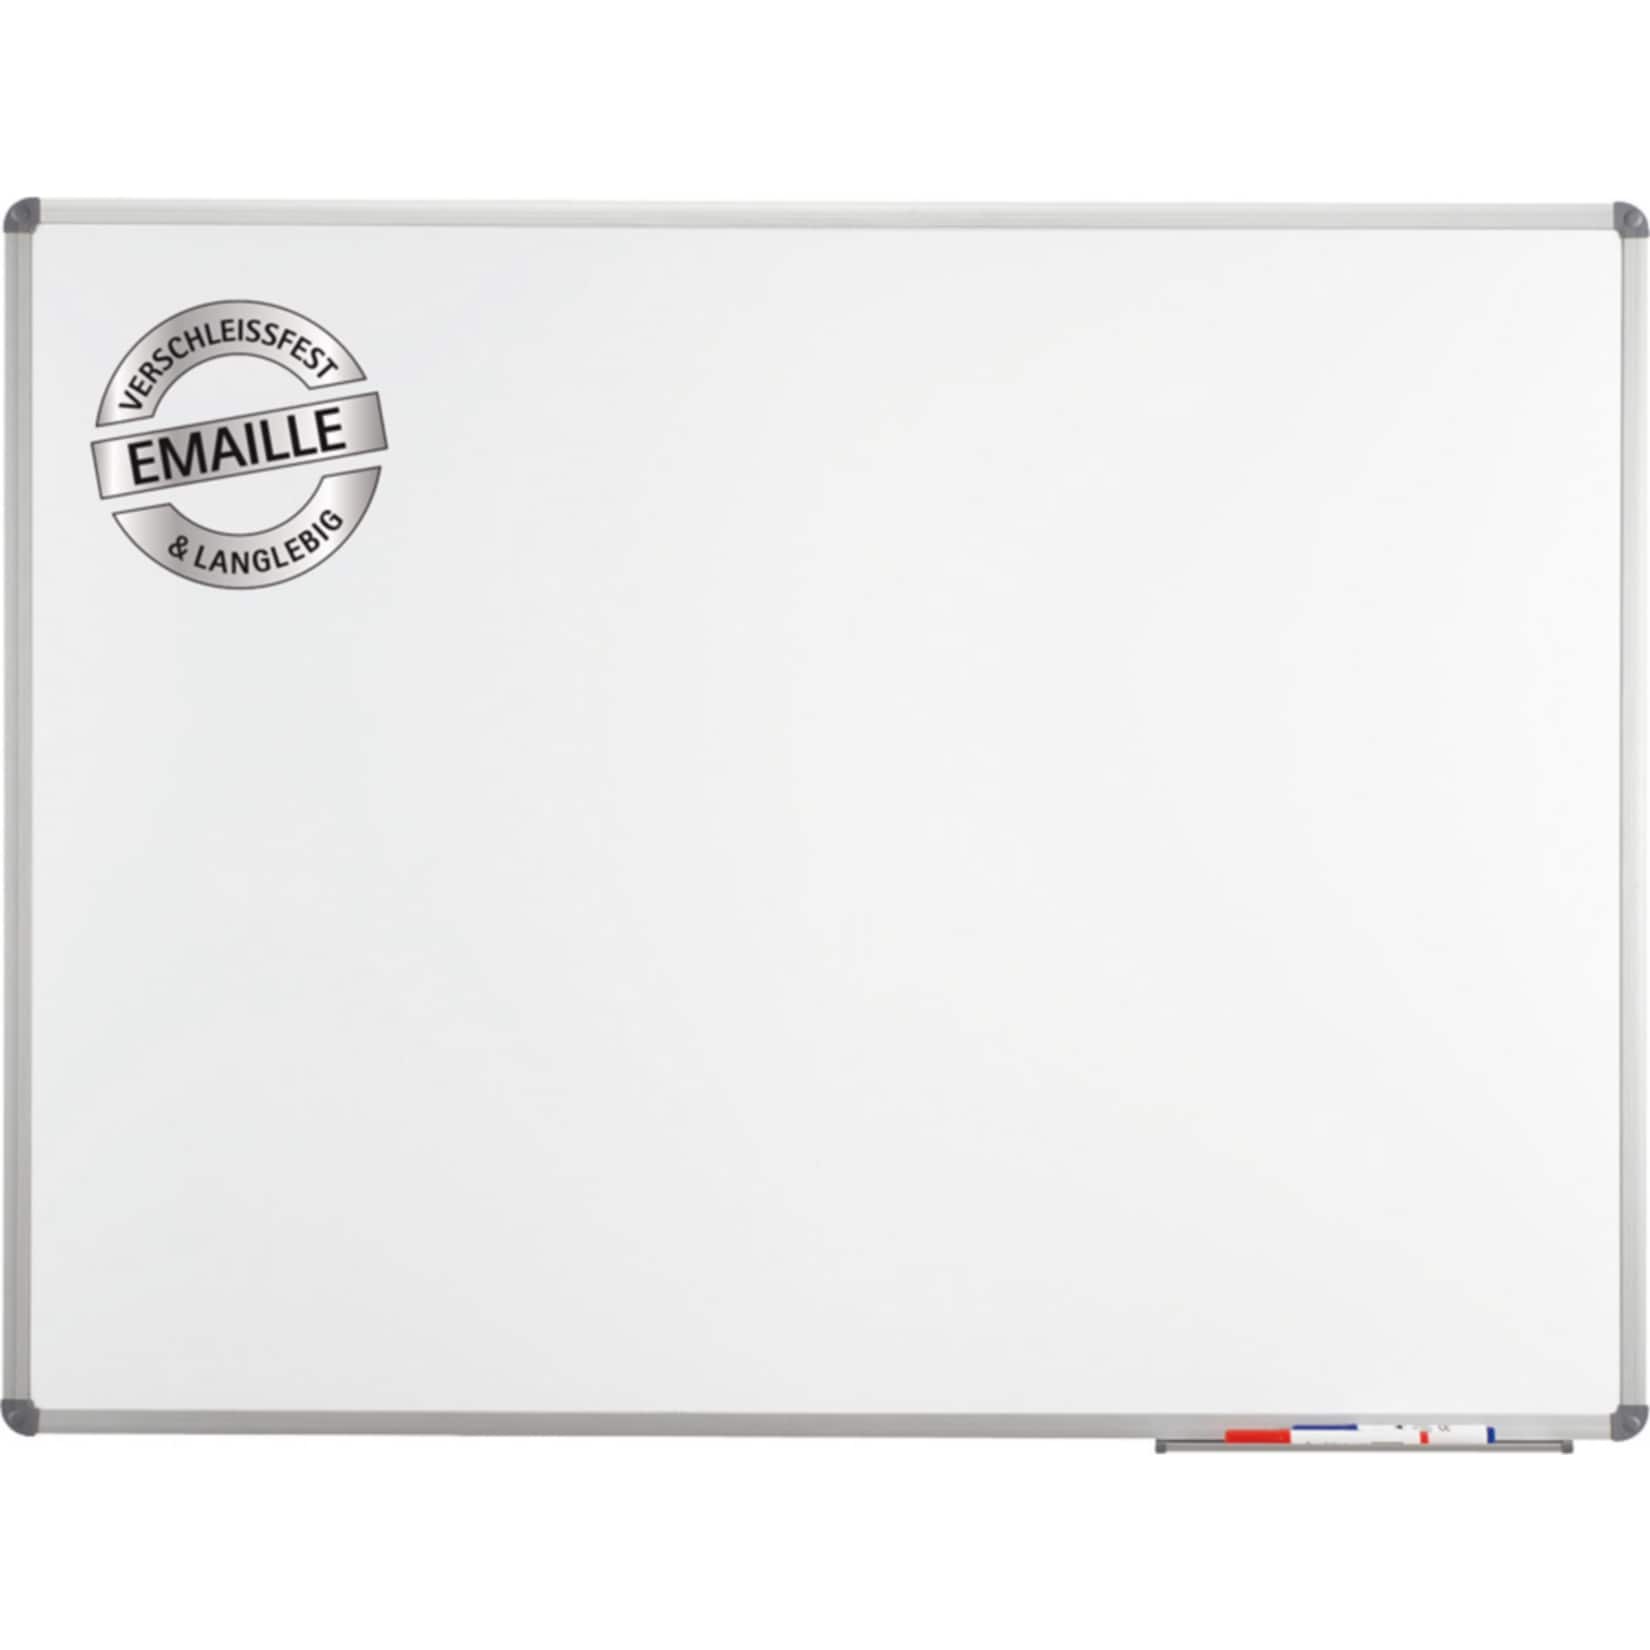 MAUL Whiteboard MAULstandard, Emaille - 120 x 300 cm